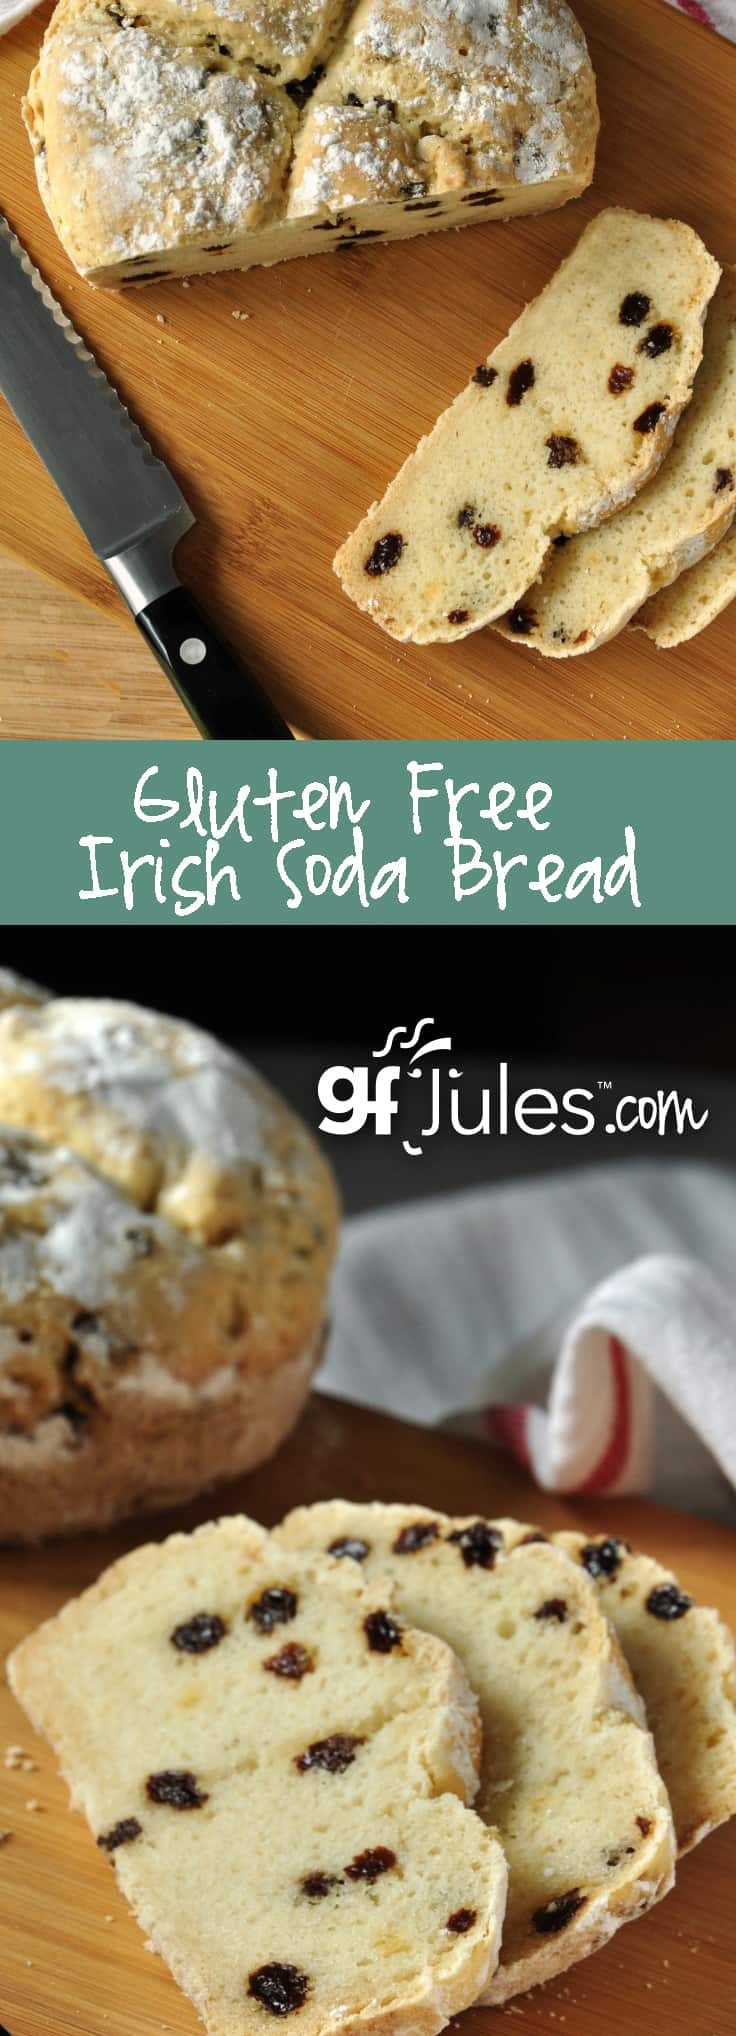 Dairy Free Irish Soda Bread
 Easy Gluten Free Irish Soda Bread Gluten free recipes